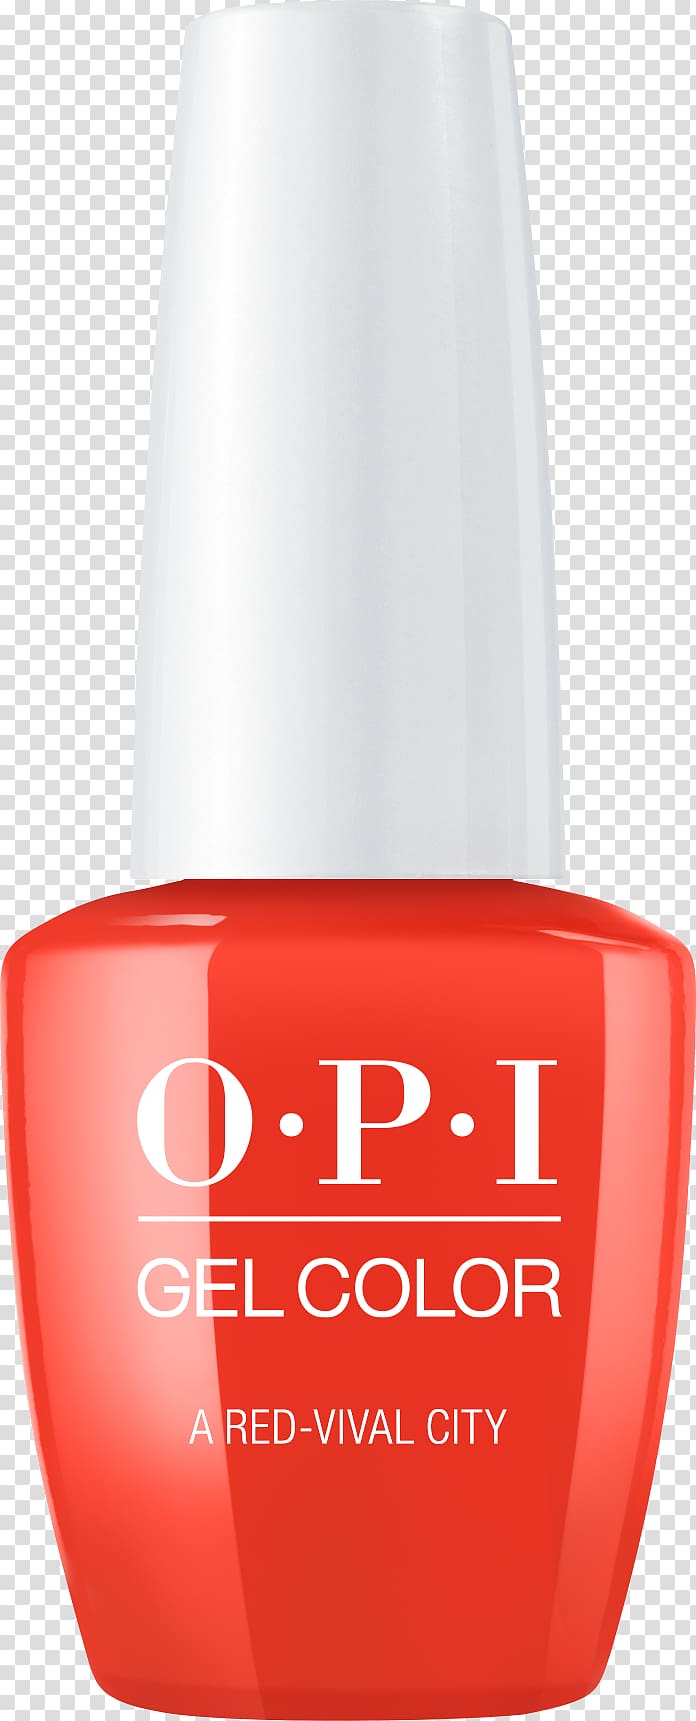 OPI GelColor OPI Products Gel nails Nail Polish, nail polish transparent background PNG clipart